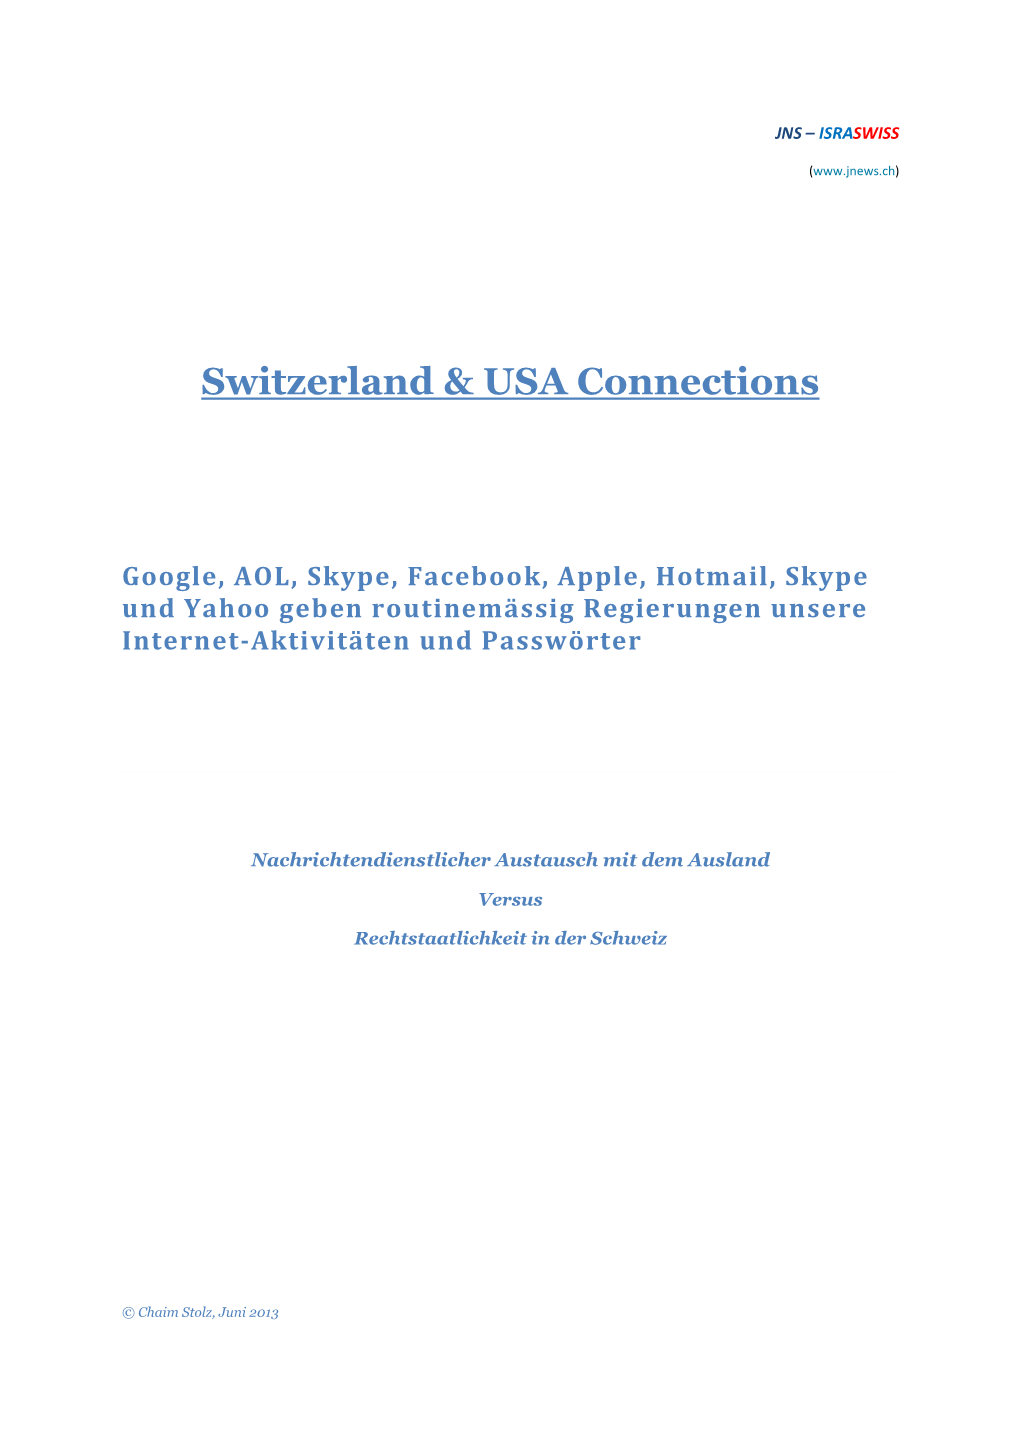 Switzerland & USA Connections